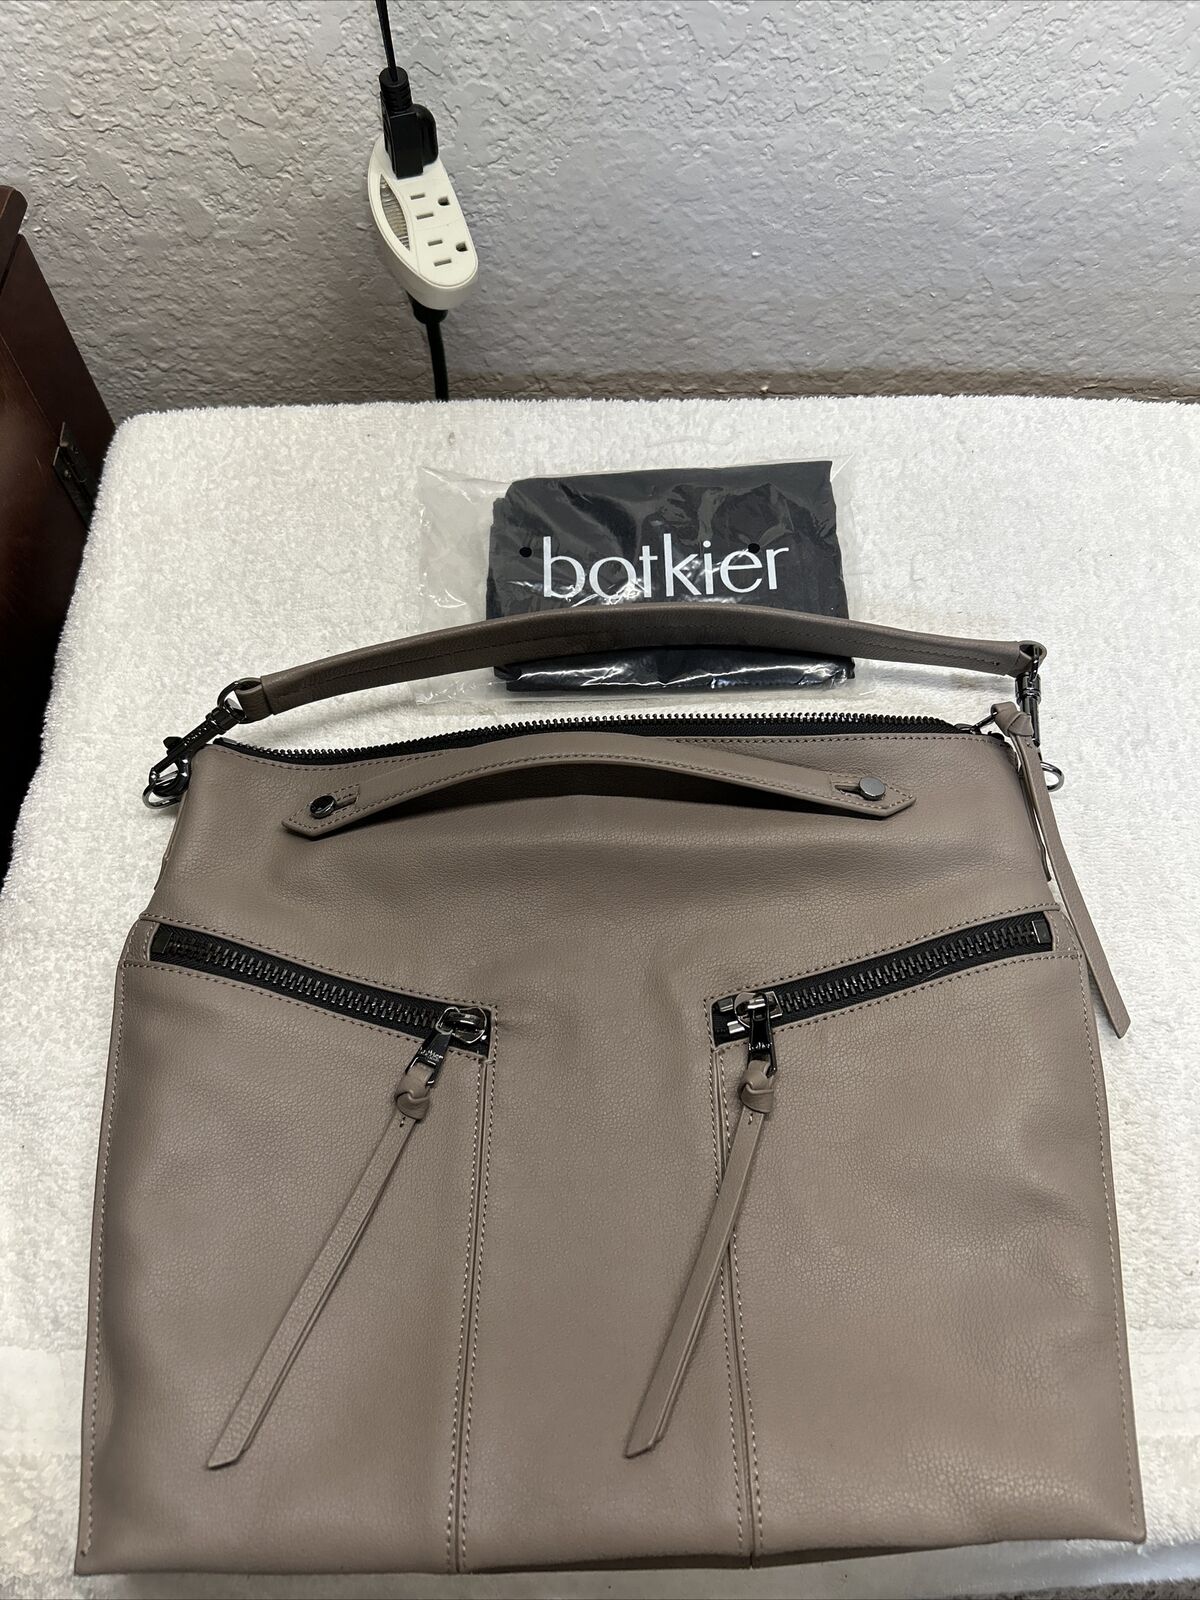 BOTKIER Taupe Leather Pebbled Satchel Handbag Tote Bag Dust Bag NEW